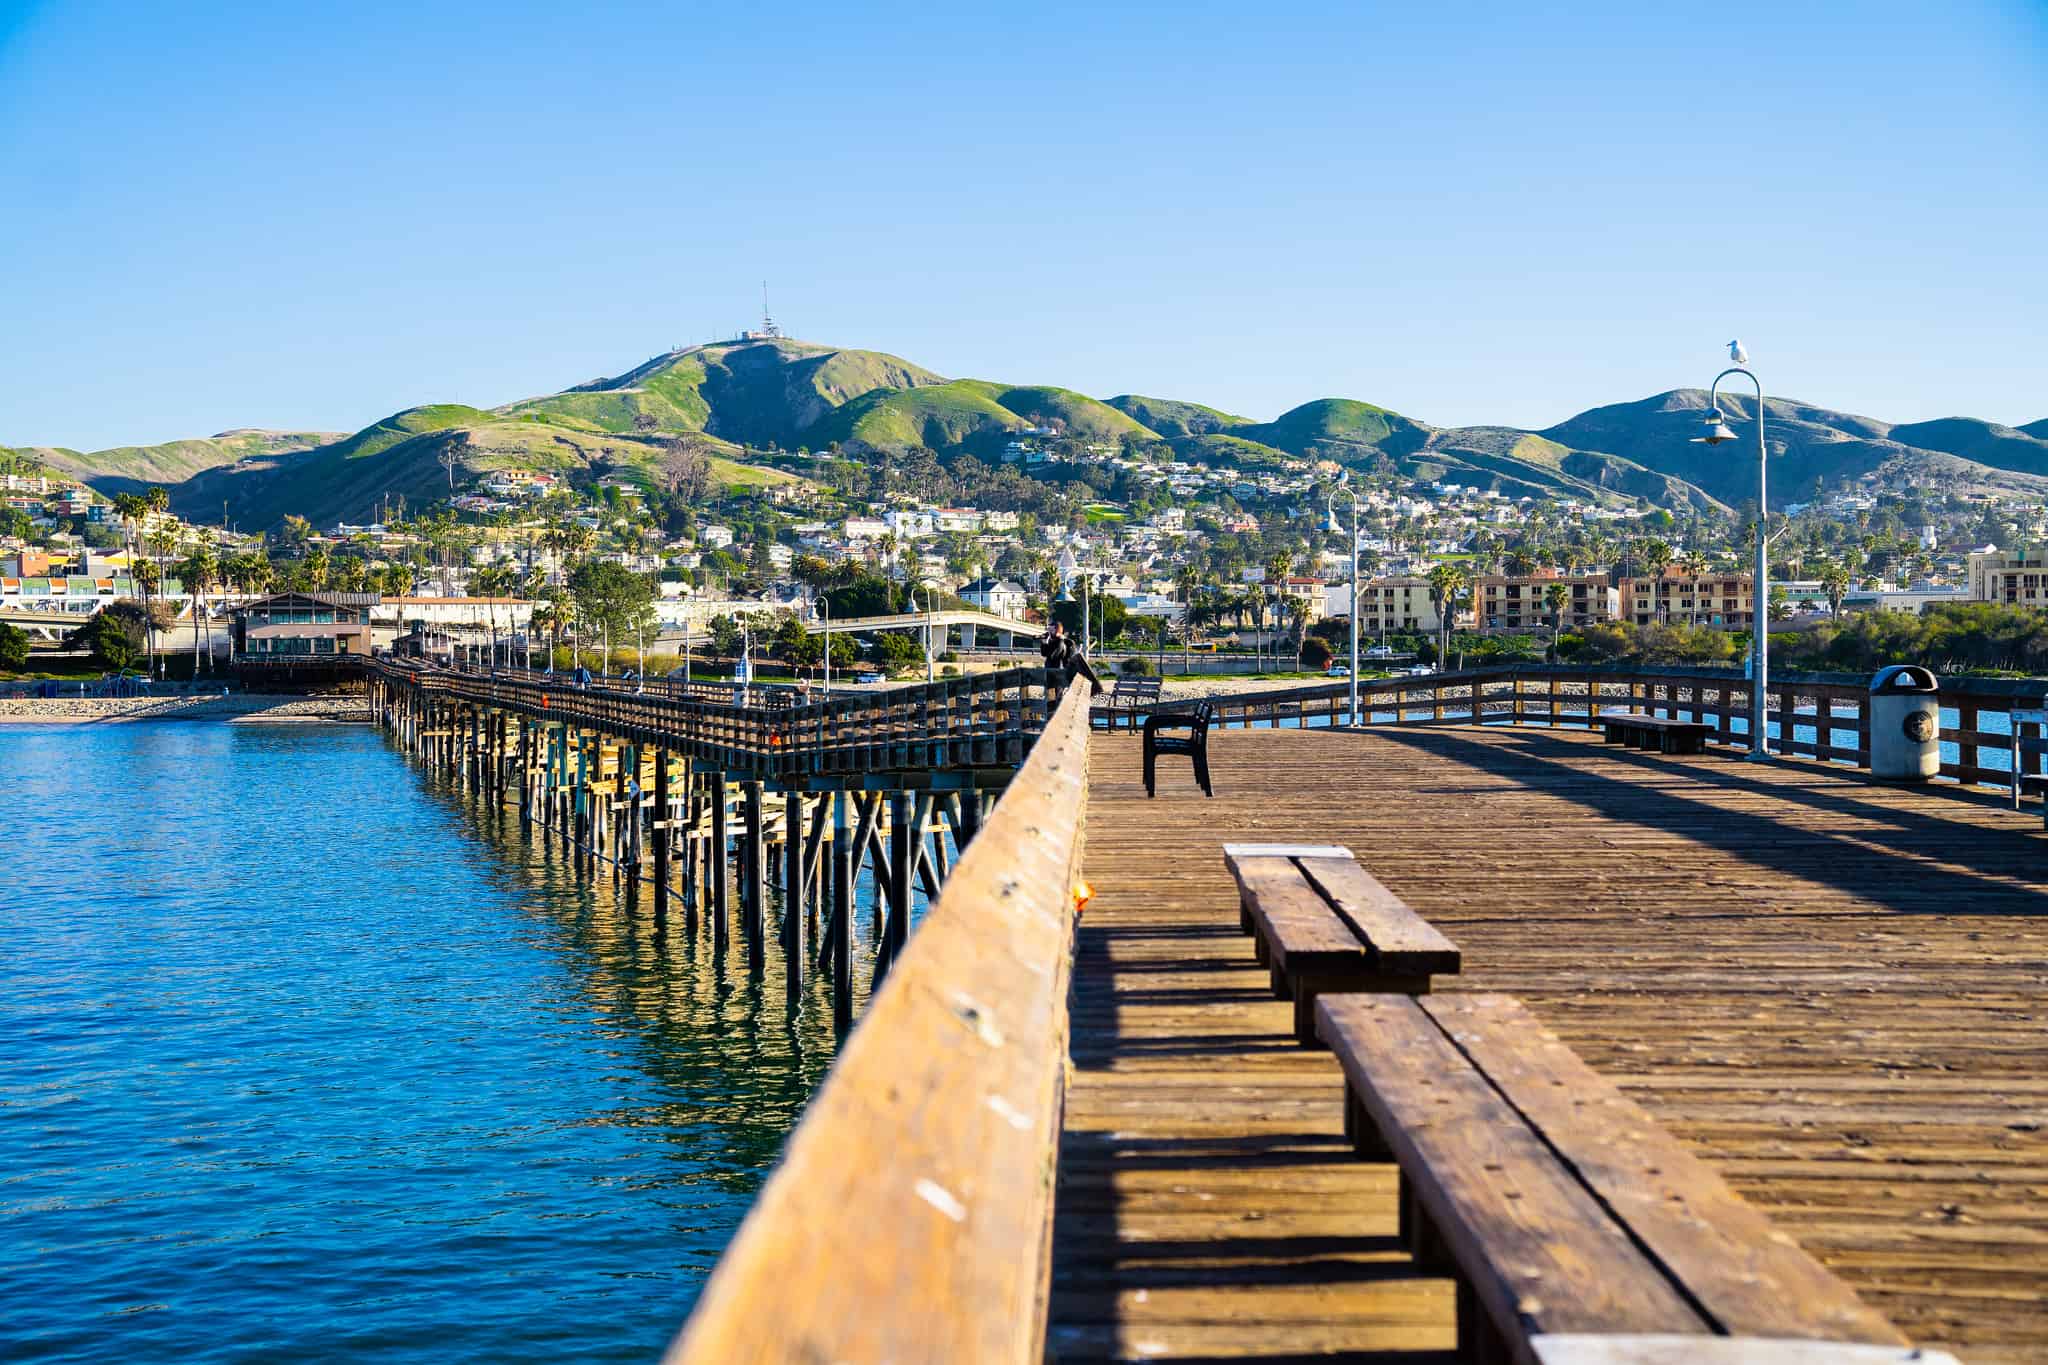 Best things to do in Ventura California - Michael Anderson - enjoy a nice walk on the Ventura Pier by VisitVentura